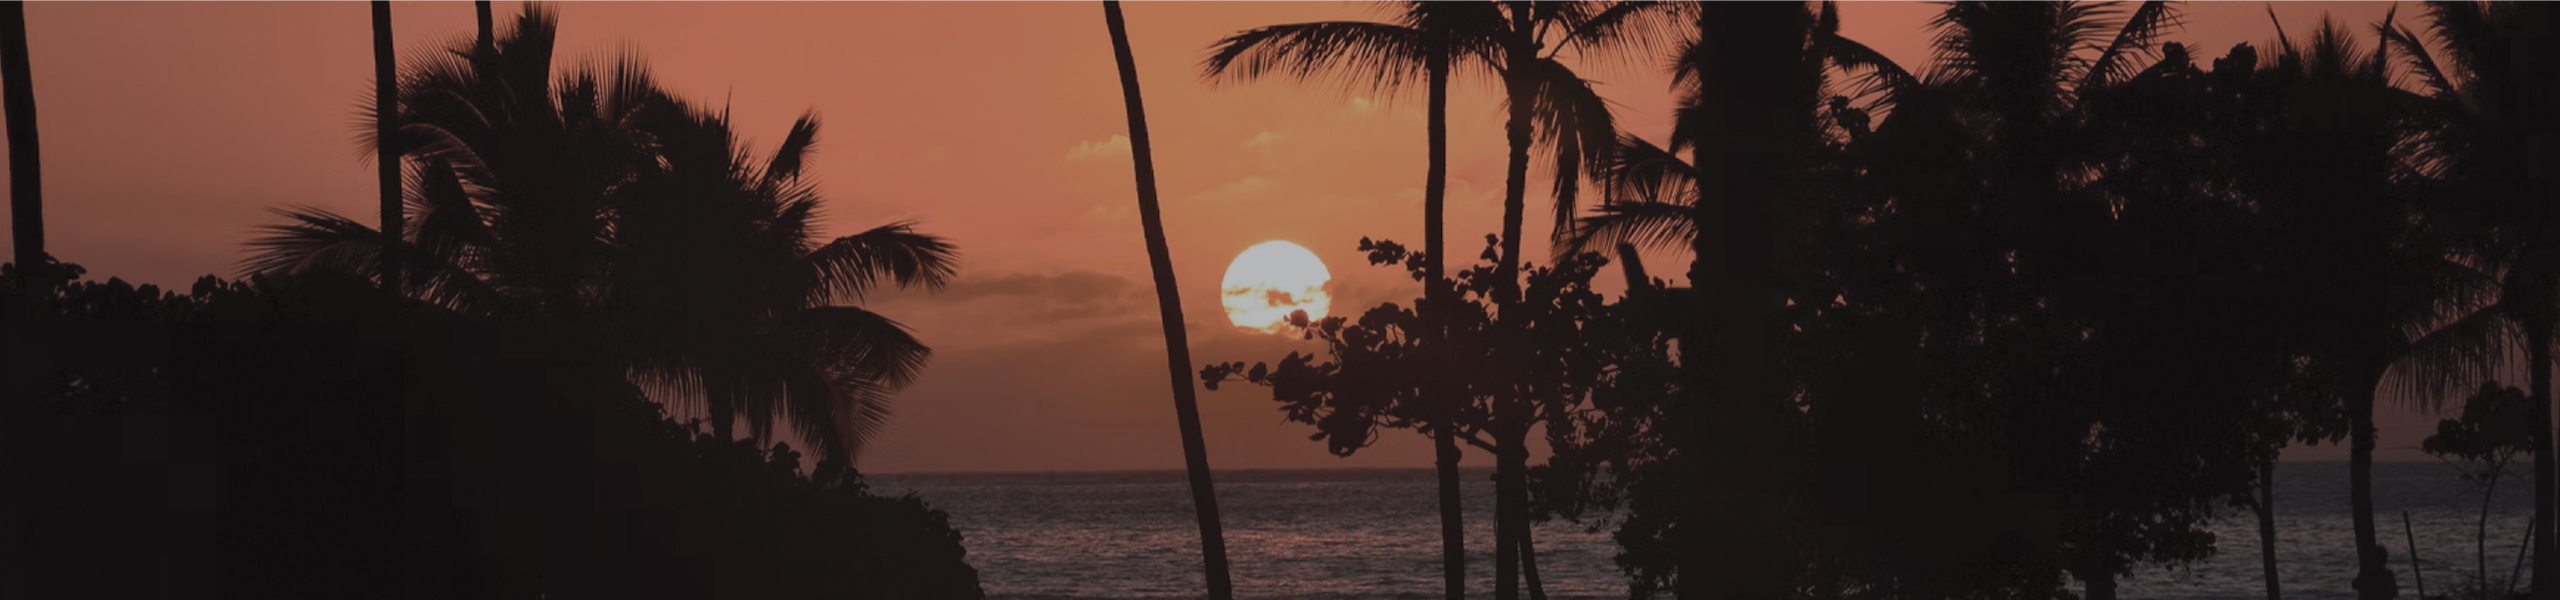 Tropical and Hawaiian Hymns | Christian Hymns & Gospel Music